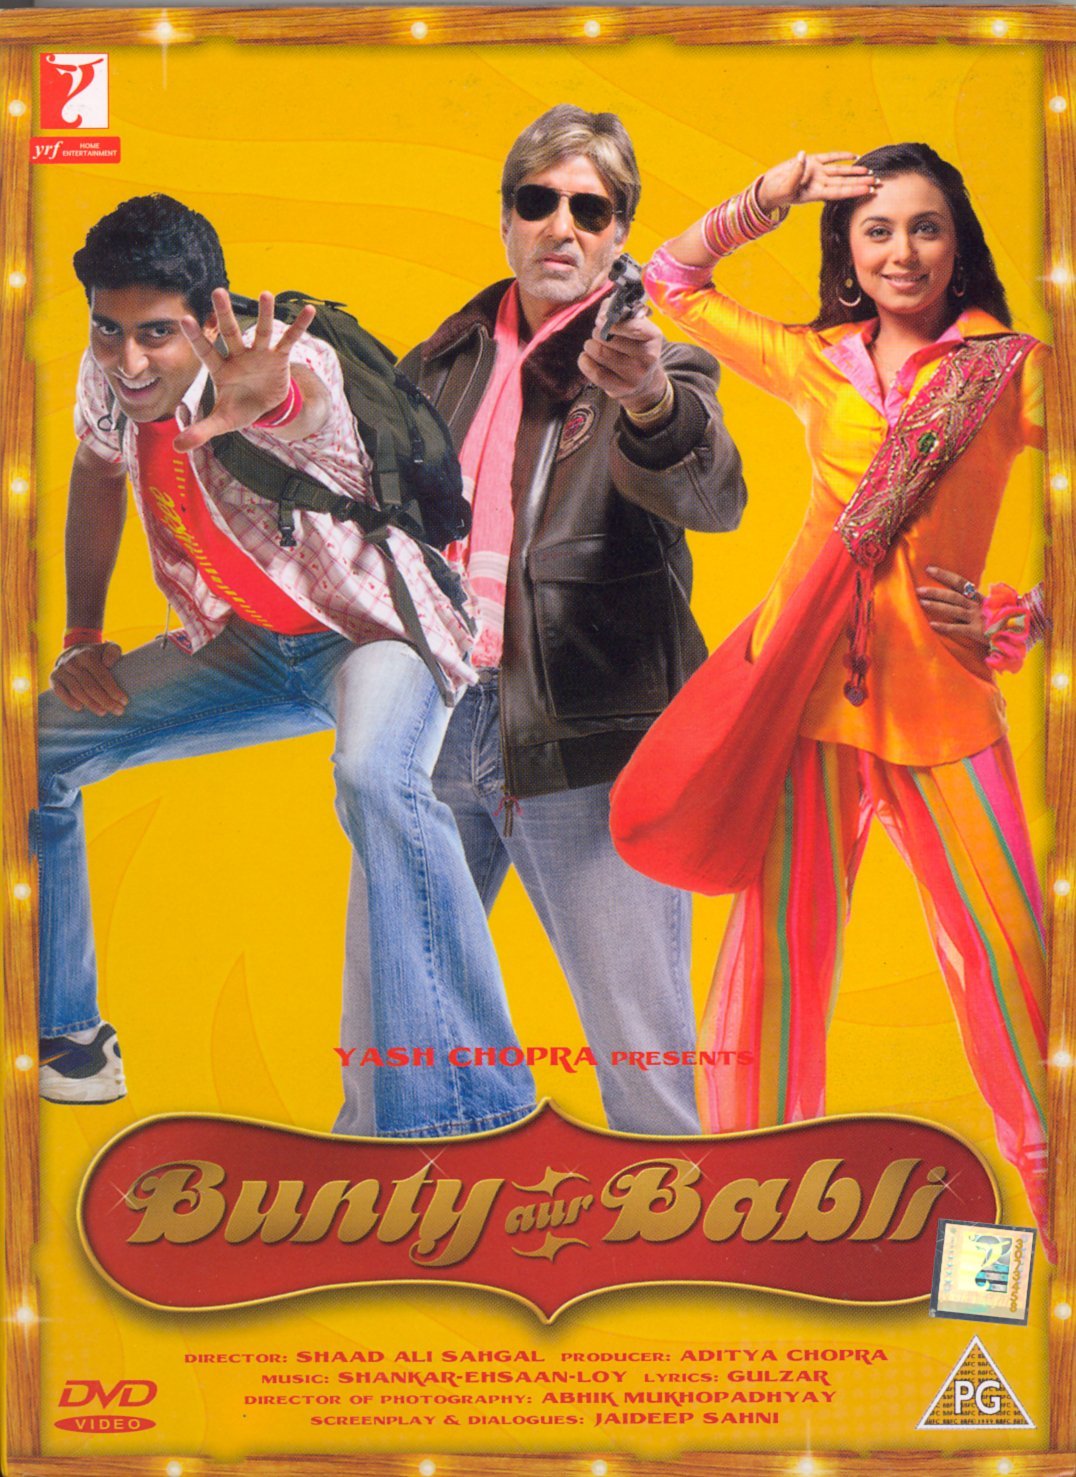 EXCLUSIVE: Abhishek Bachchan and Rani Mukerji to reunite for Bunty Aur Babli sequel?